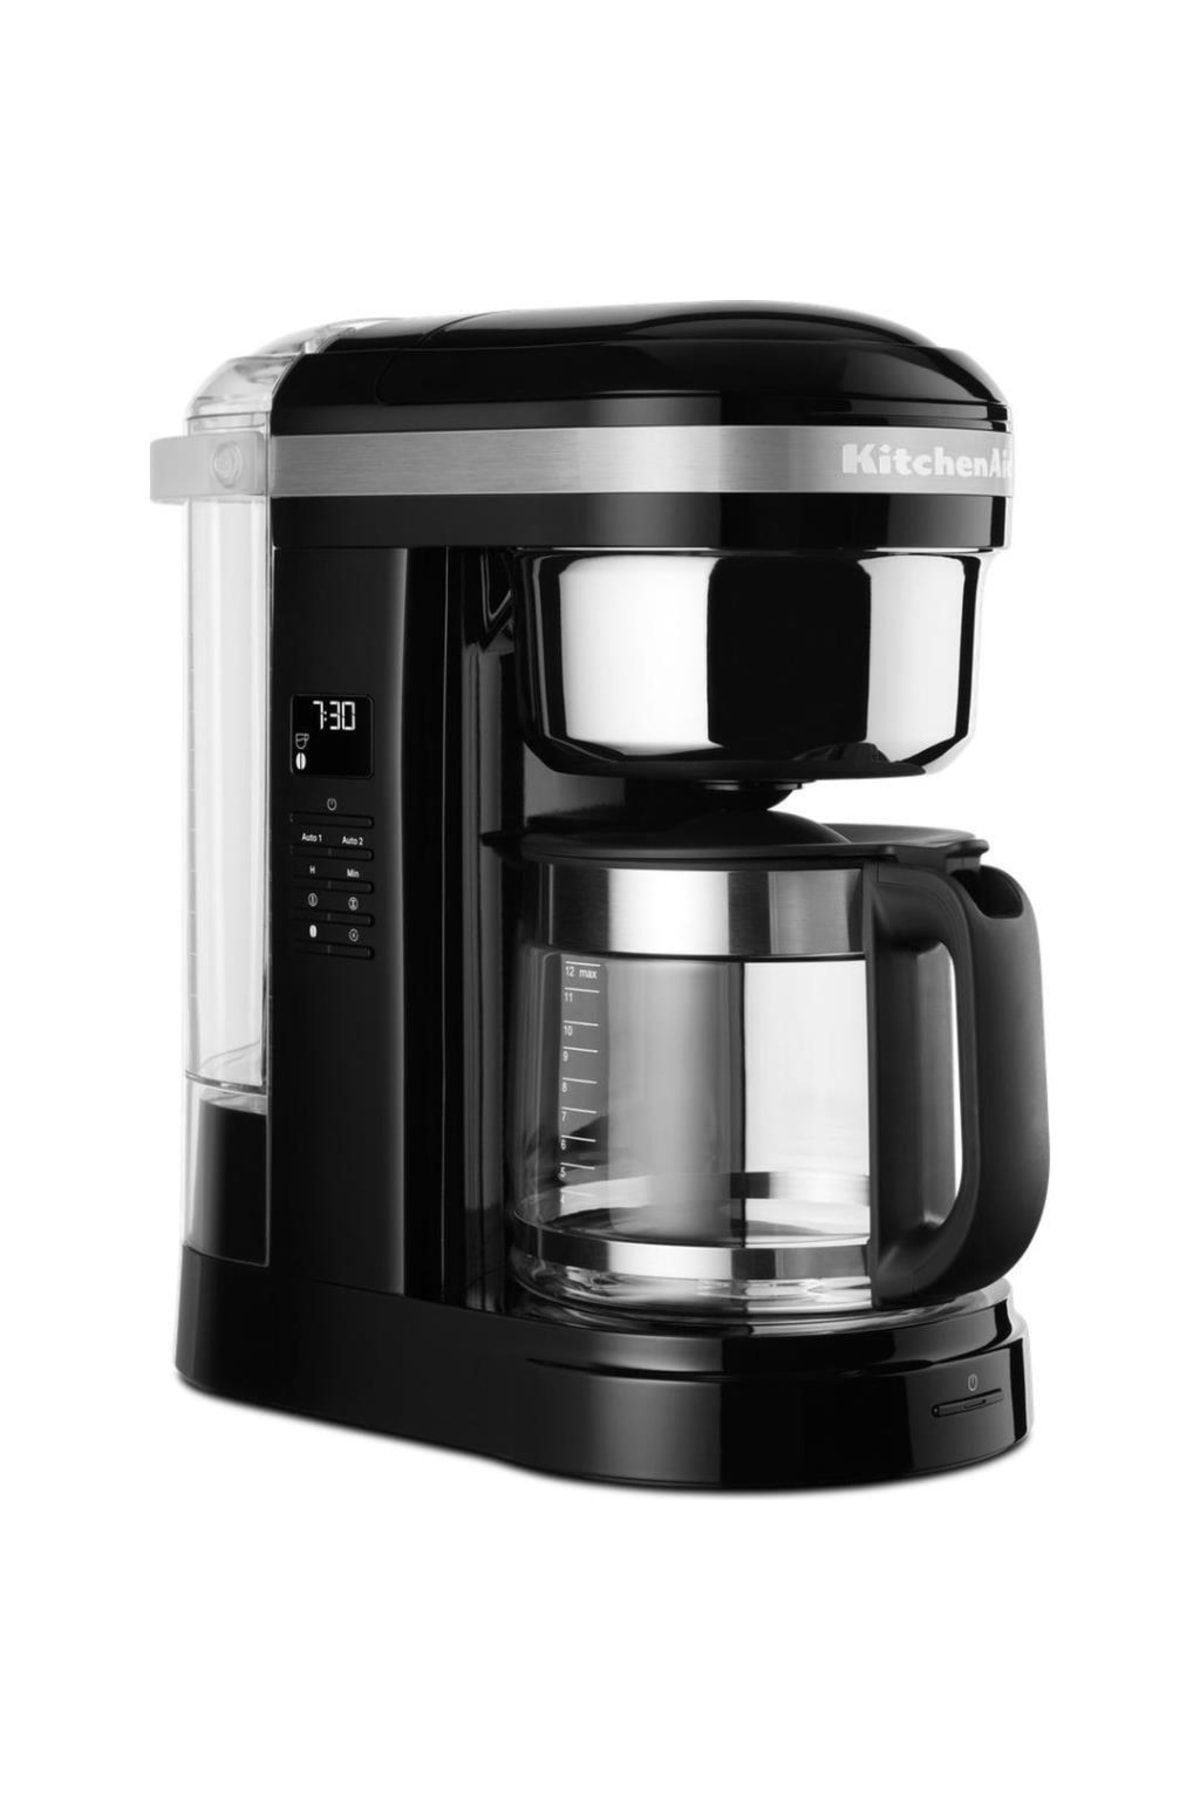 Kitchenaid Filtre Kahve Makinesi 5kcm1209 Onyx Black Eob